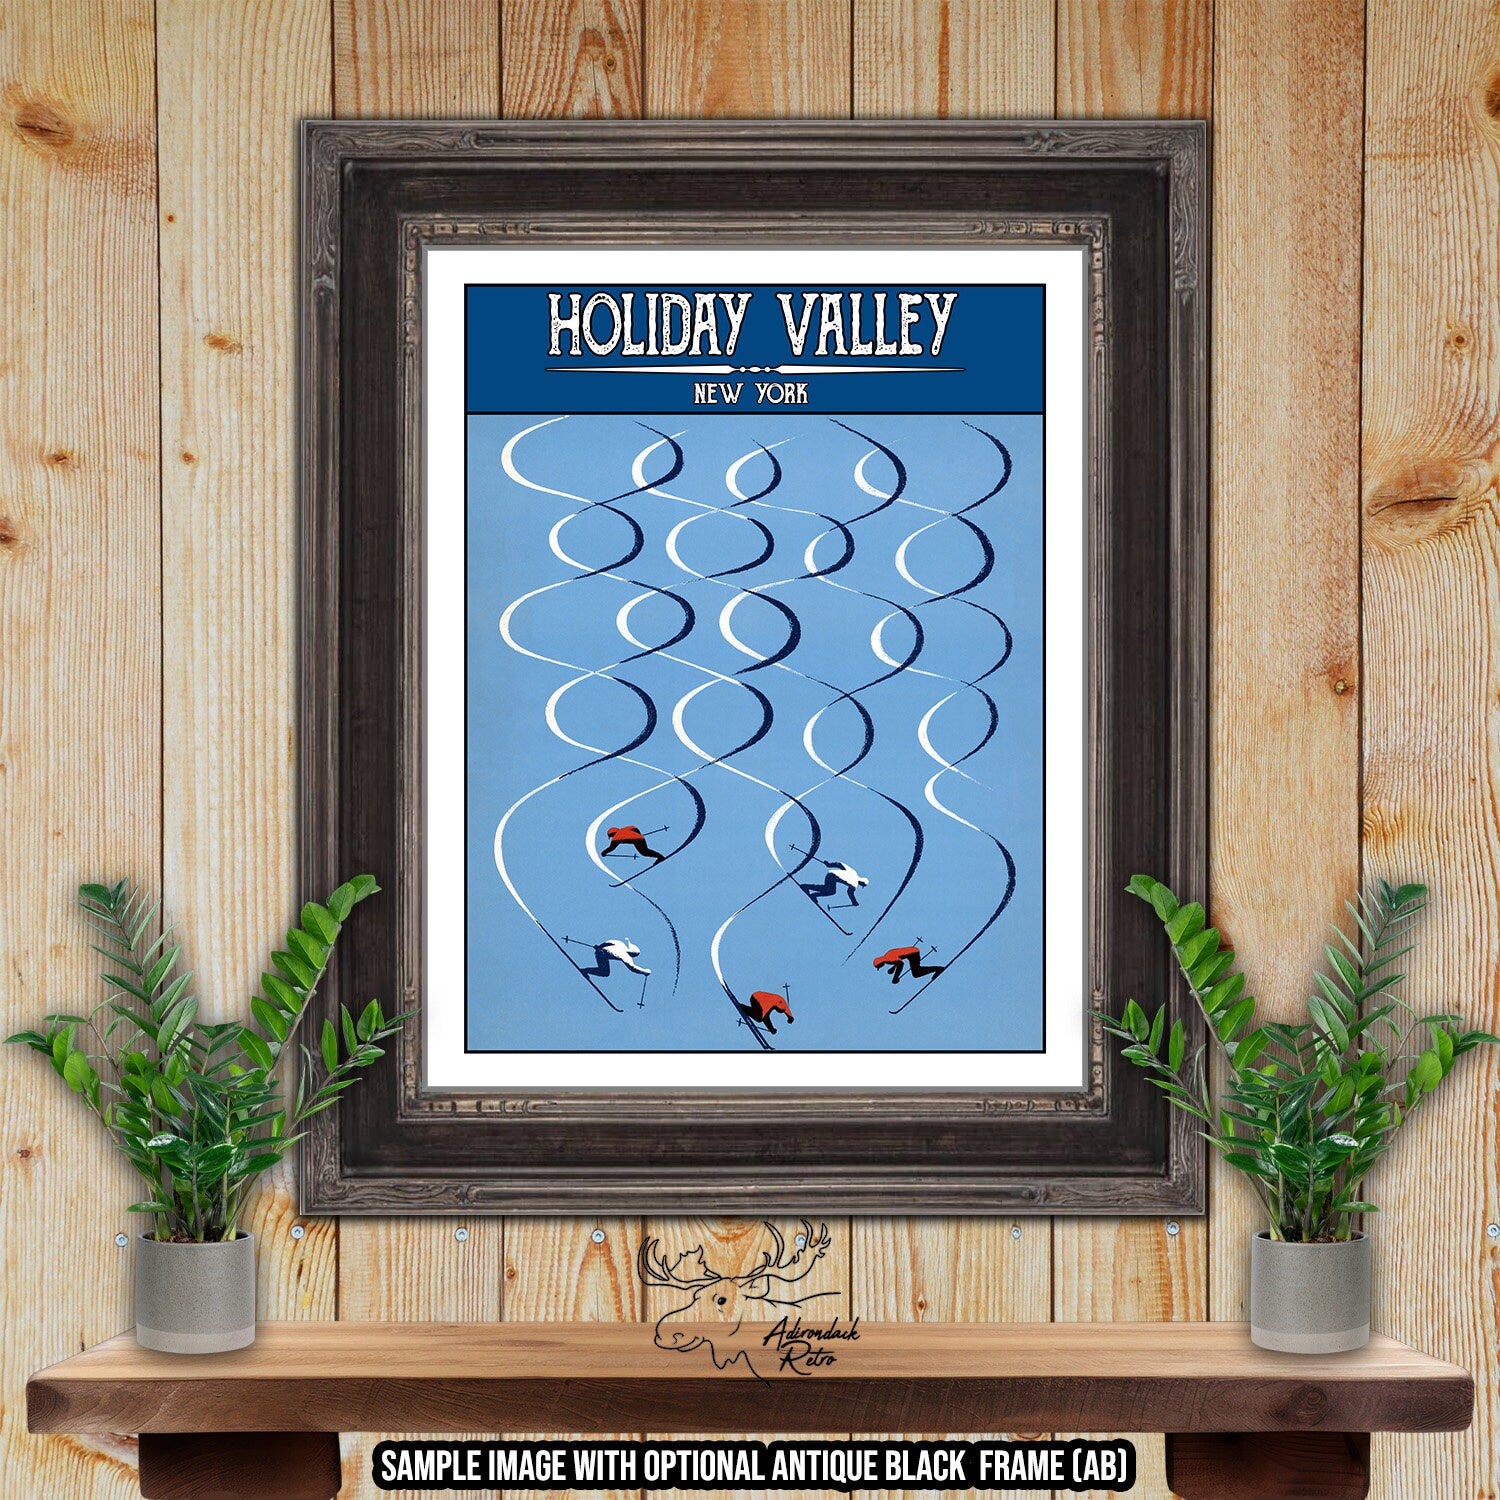 Holiday Valley New York Retro Ski Resort Poster at Adirondack Retro